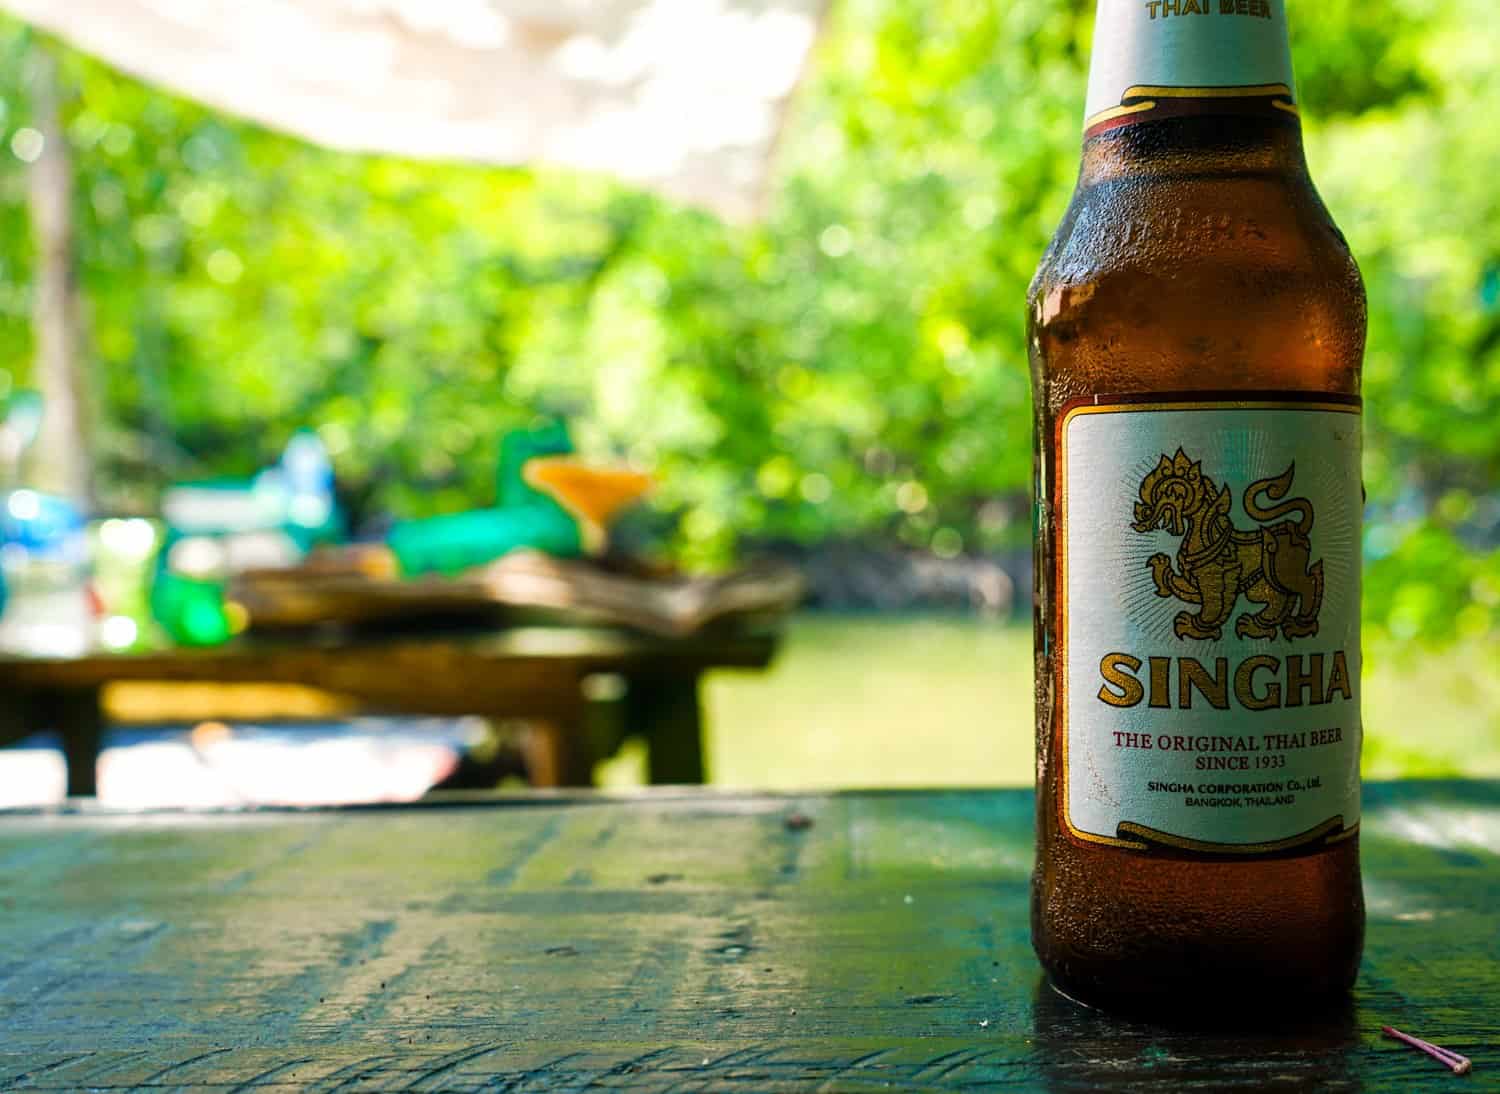 Close-up of Singha beer bottle